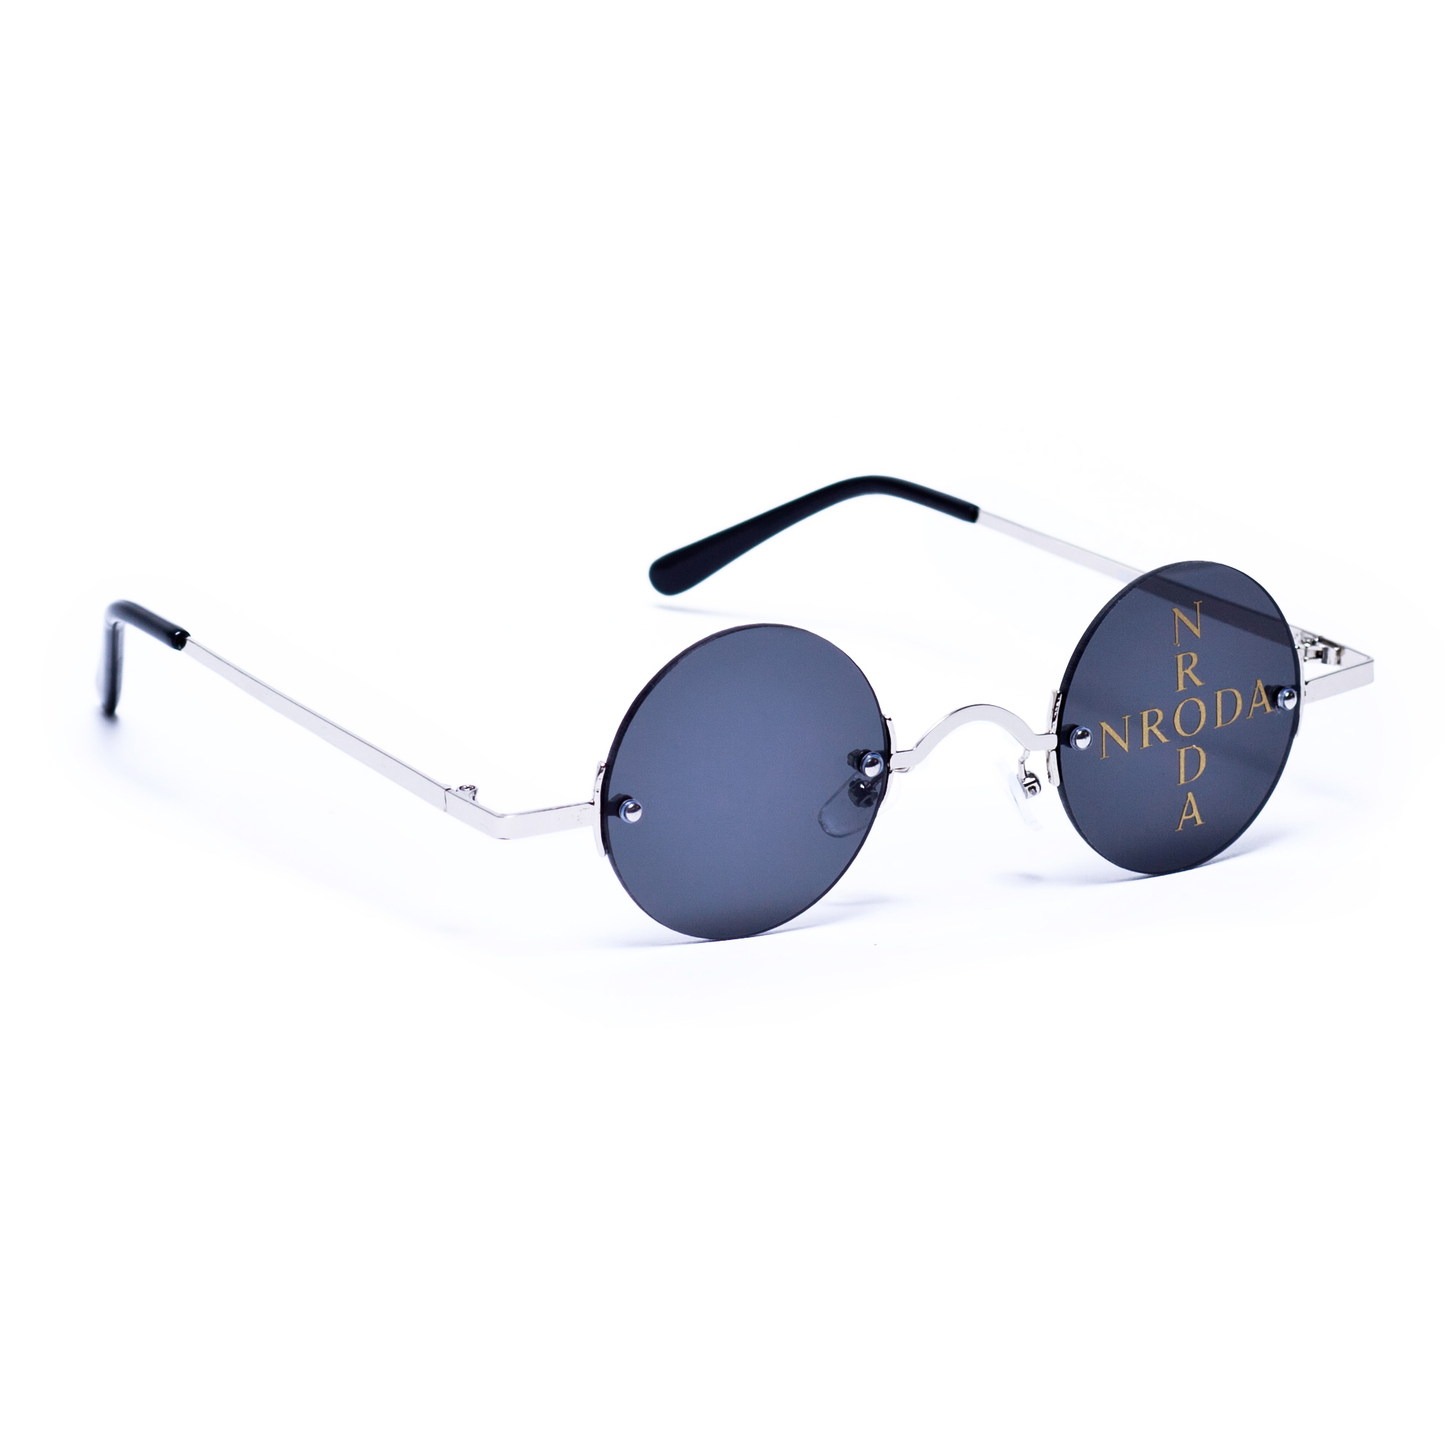 Nroda Cross Logo gold Nroda logo Eyewear Sunglasses Collection, Tnemnroda man- NRODA